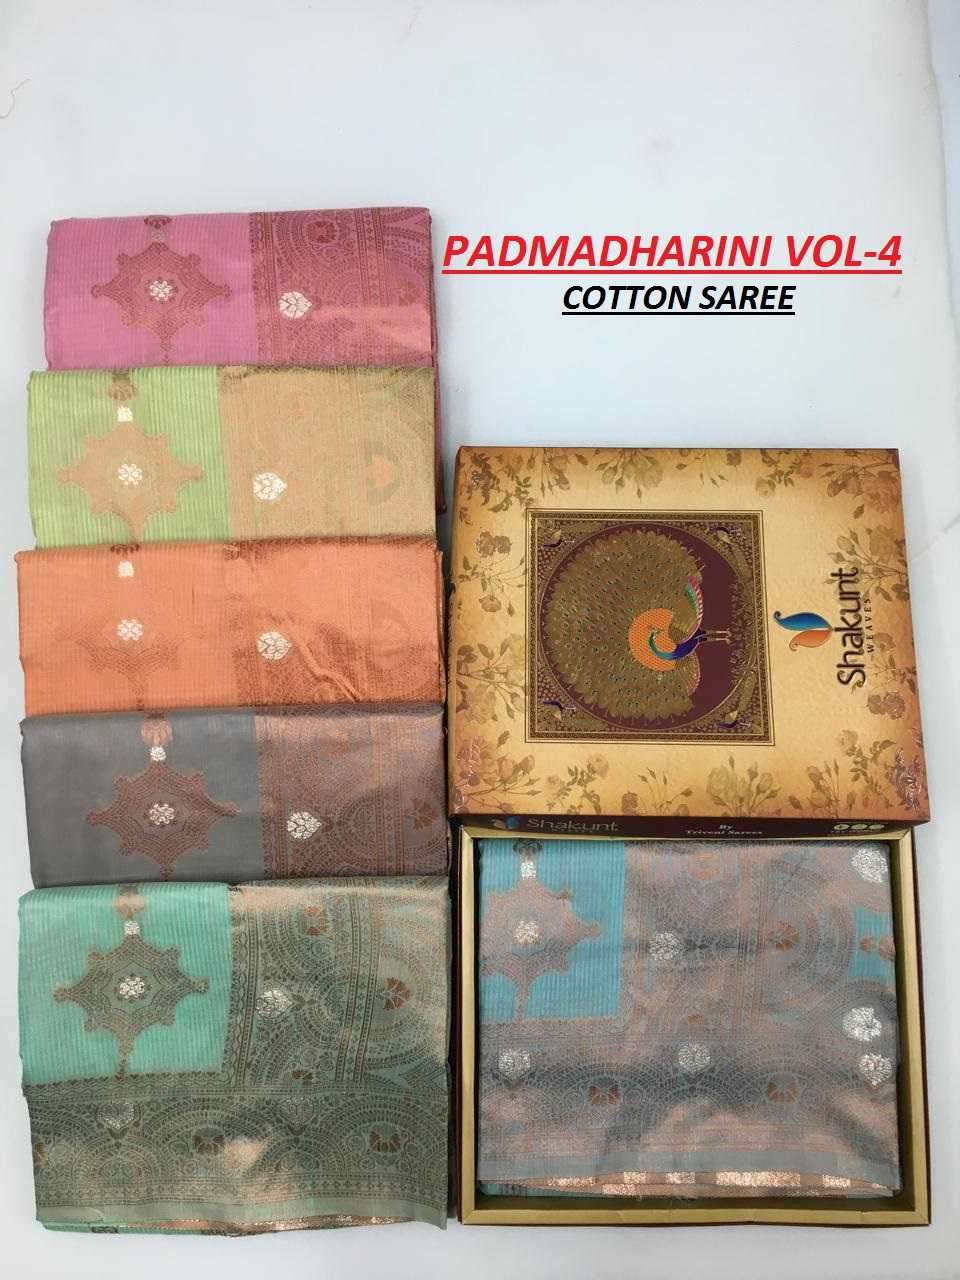 shakunt padmadharini vol 4 cotton saree